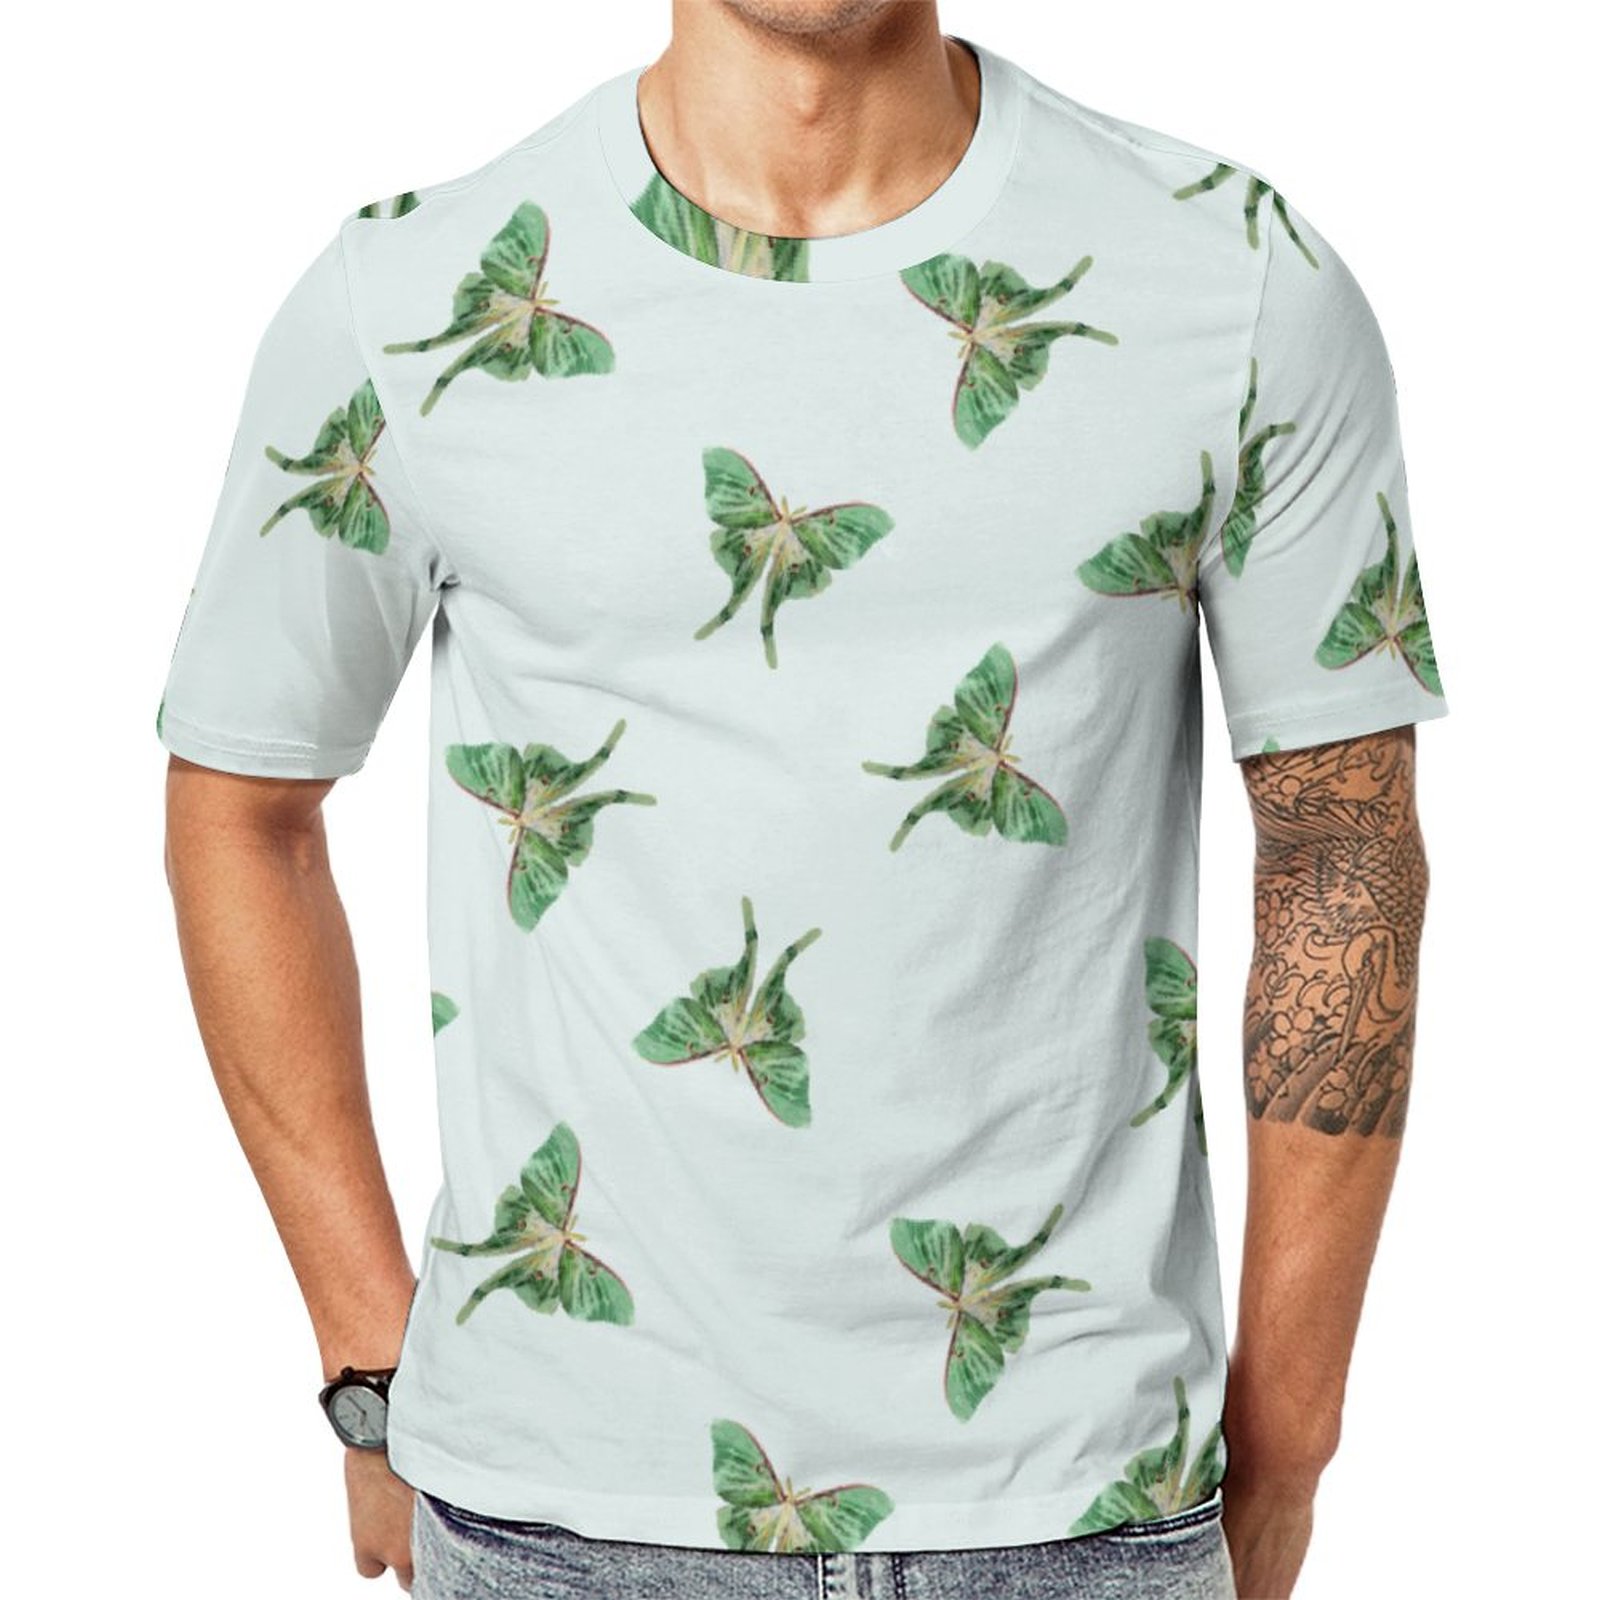 Green Luna Moth Short Sleeve Print Unisex Tshirt Summer Casual Tees for Men and Women Coolcoshirts